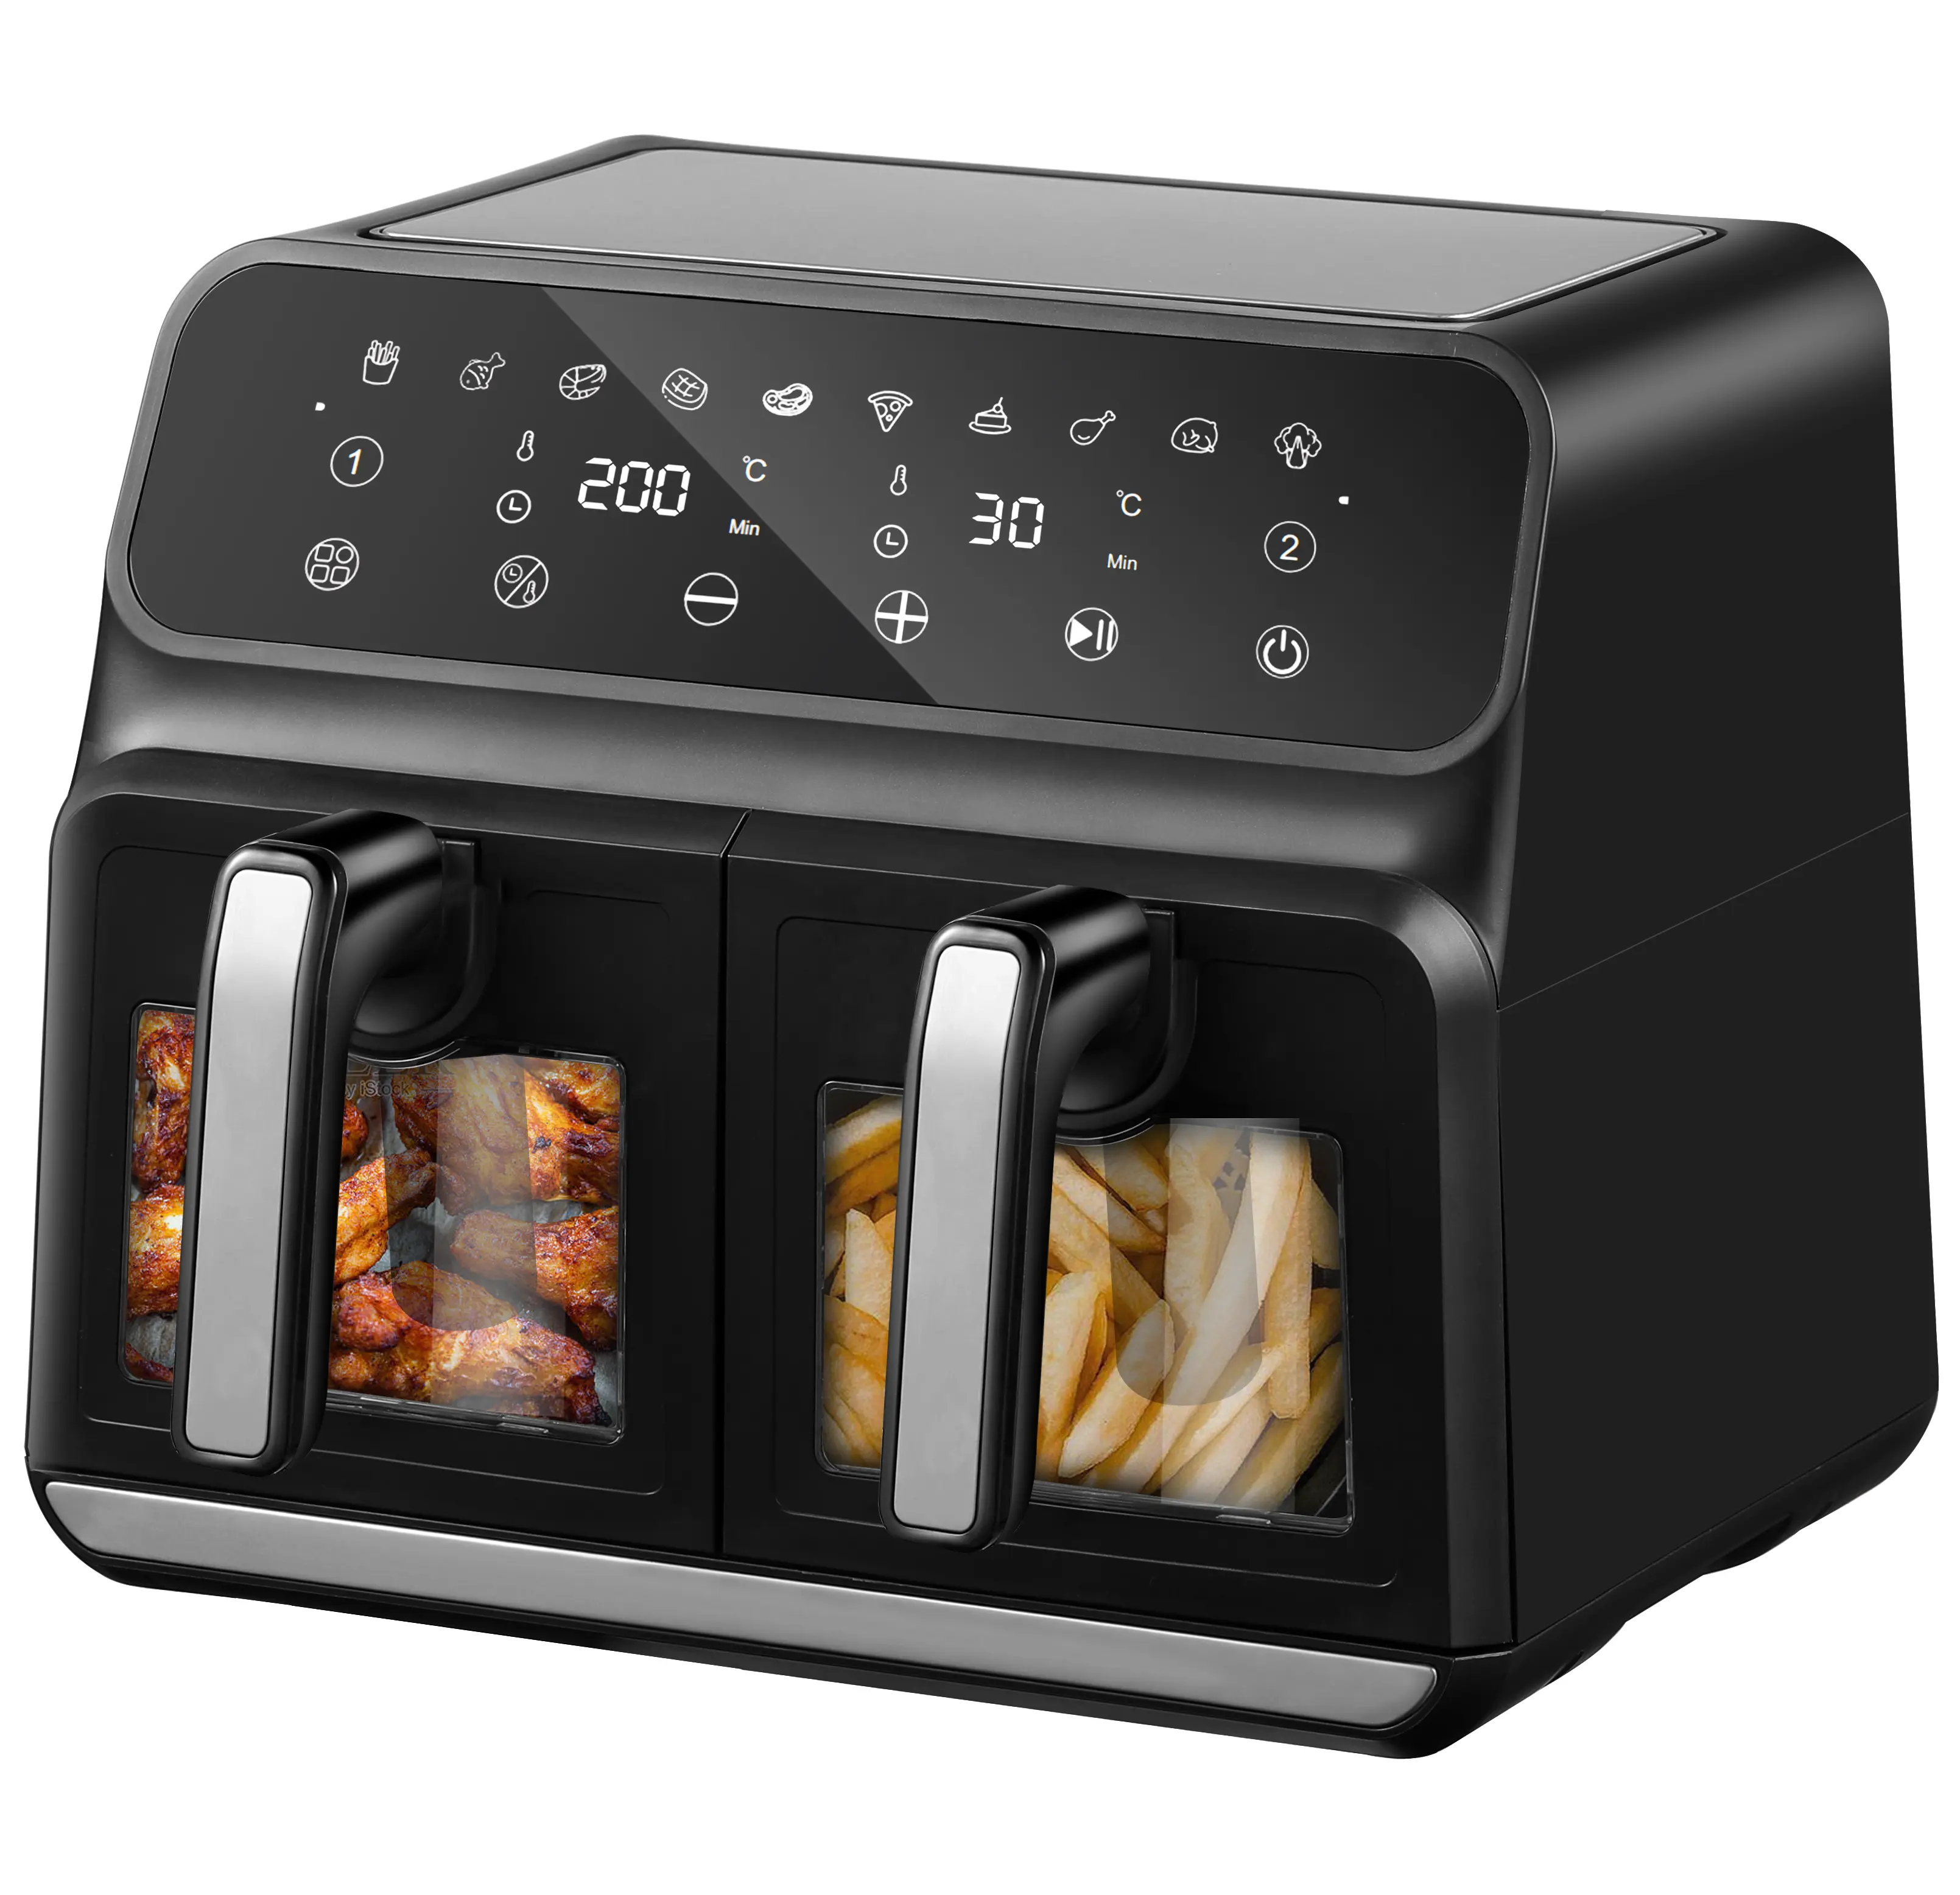 Hot Smart Kitchen Appliances Multifuncional Electric Digital 8L Double Door Deep Fryer Dual Basket Air Fryer Oven